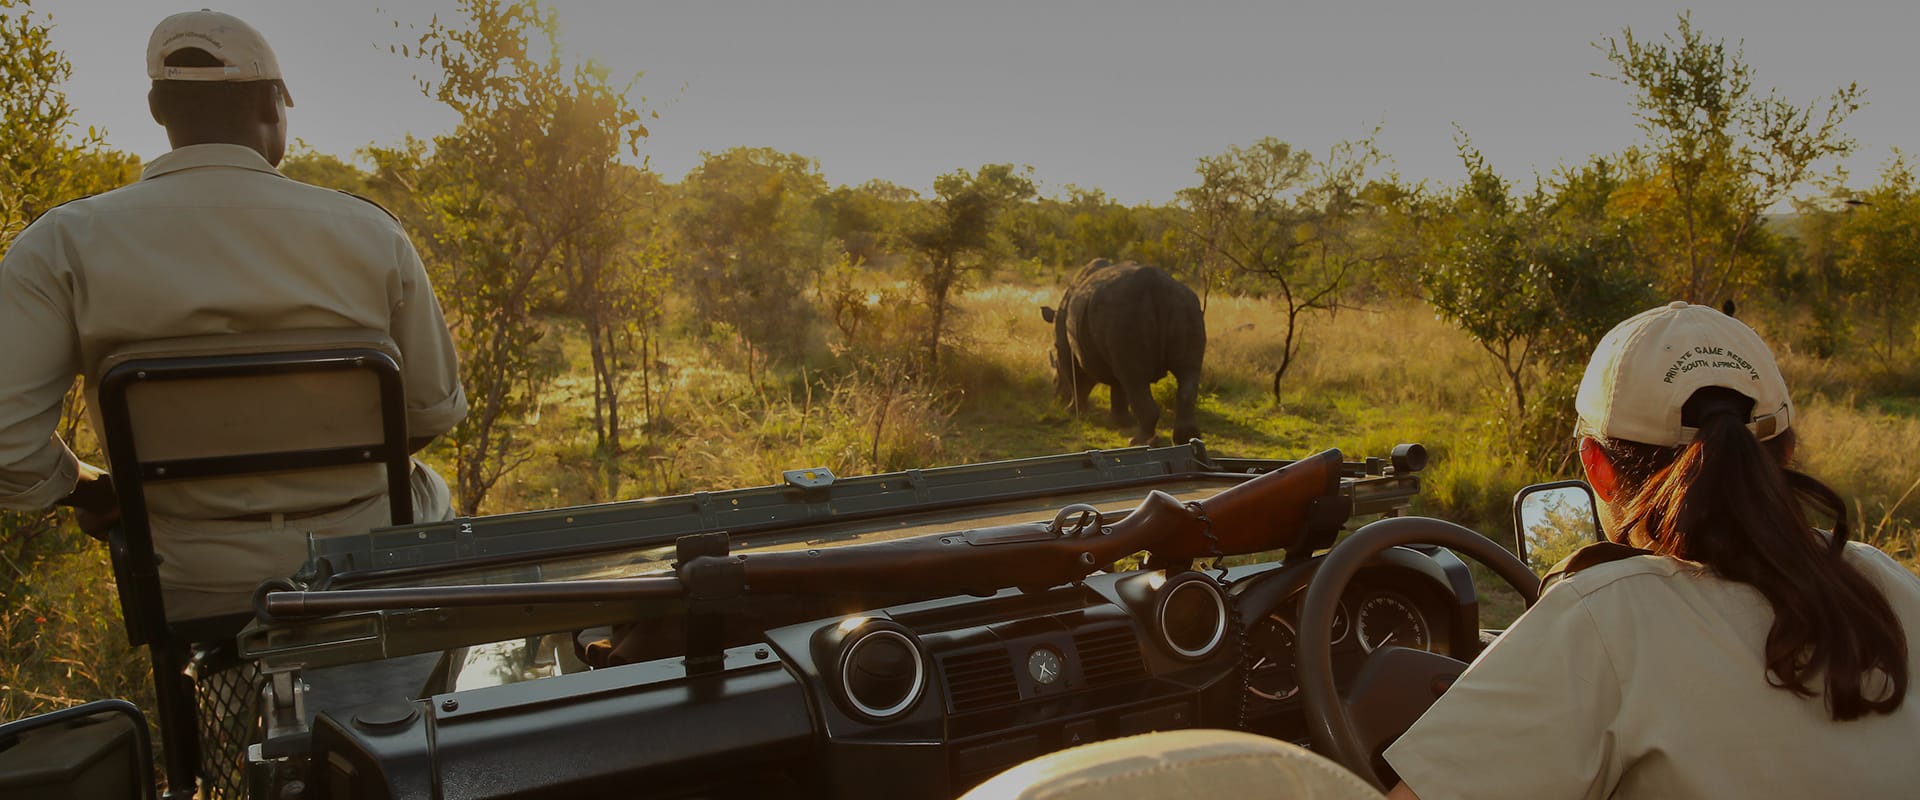 Best African Safari Destinations